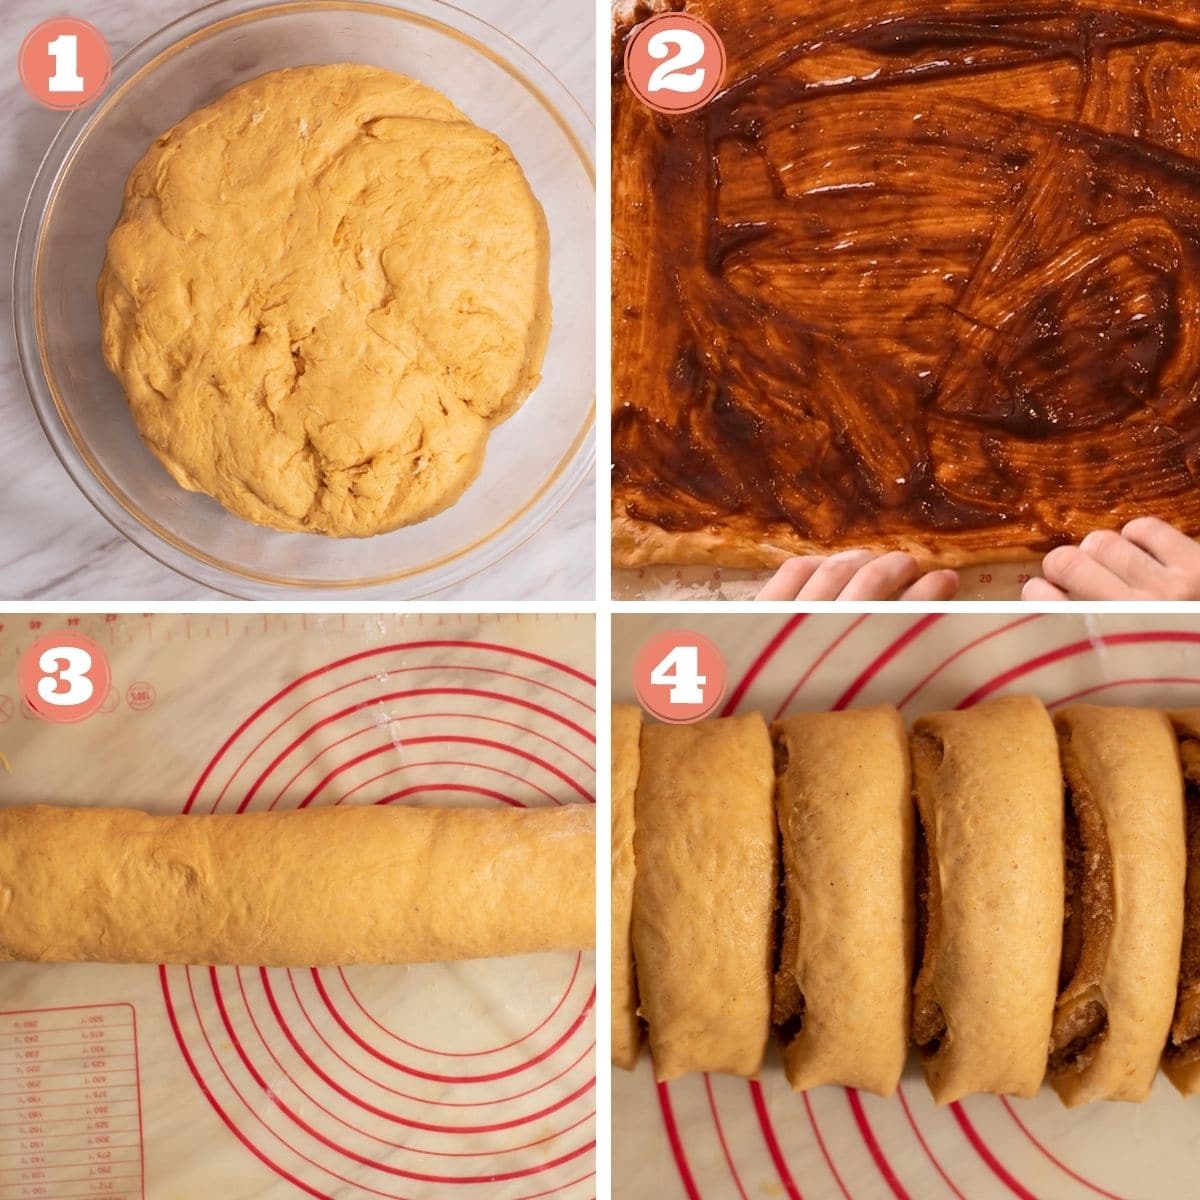 Steps 1 through 4 to prepare and slice cinnamon rolls